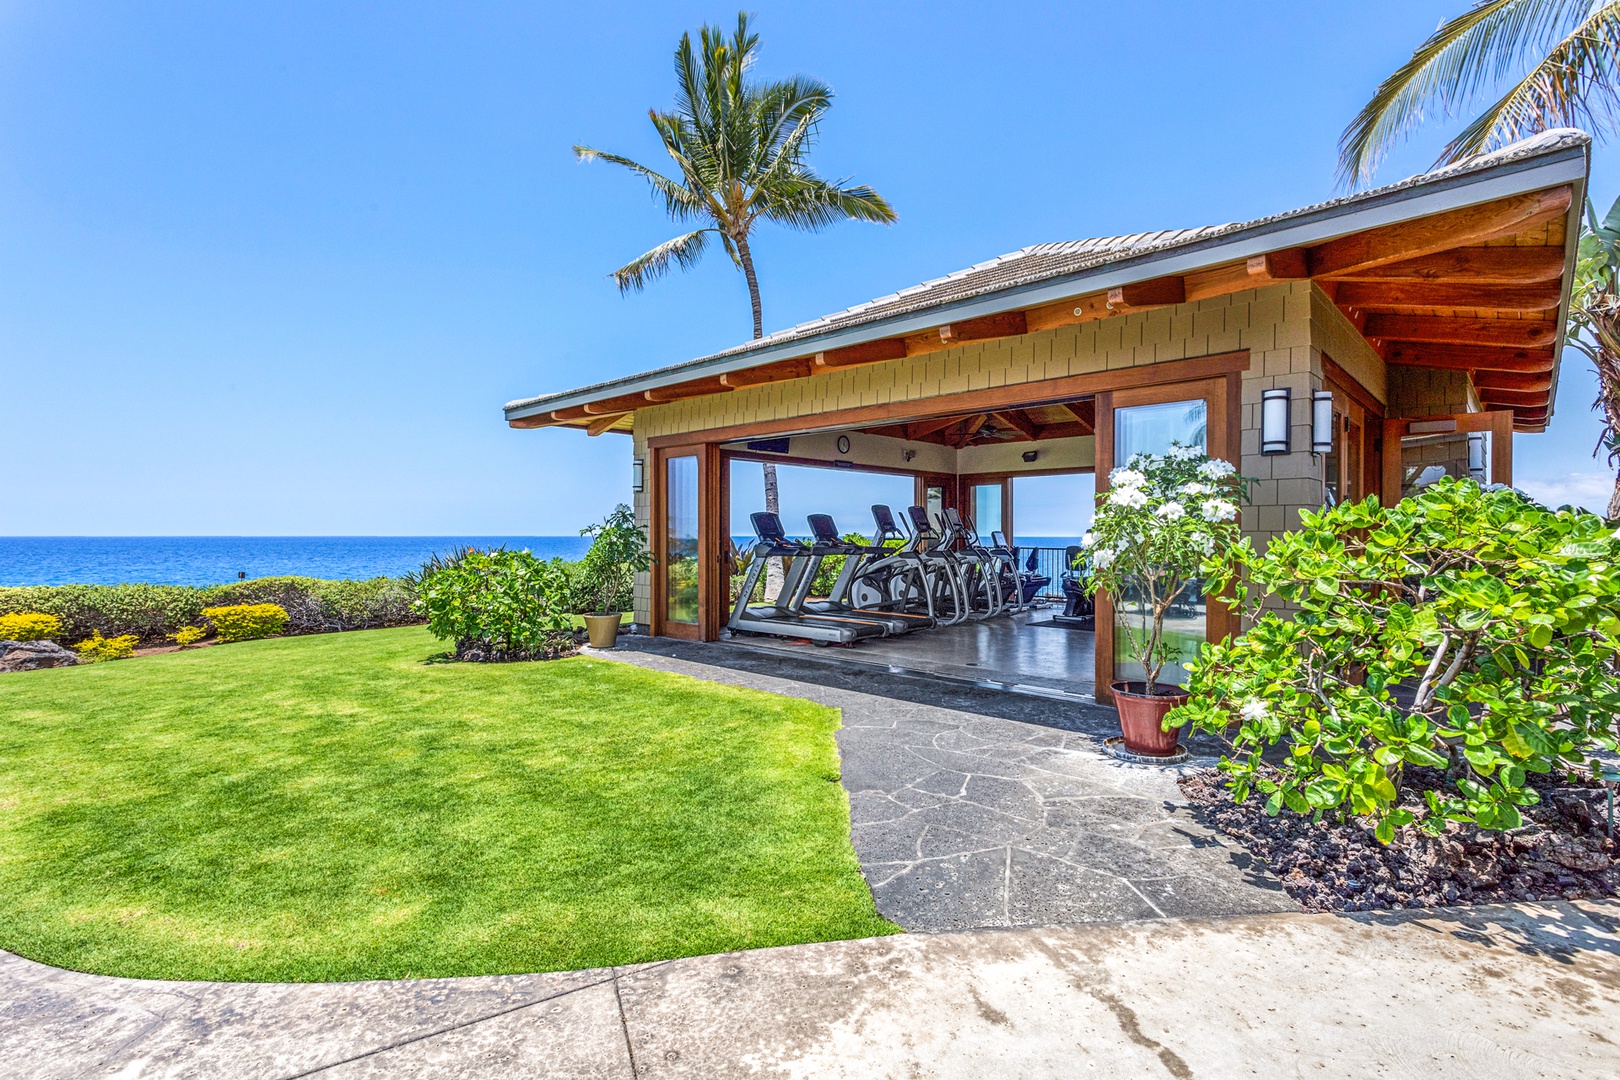 Waikoloa Vacation Rentals, 2BD Hali'i Kai 12C at Waikoloa Resort - Hali’i Kai’s epic open air fitness center with panoramic ocean and coastline views.